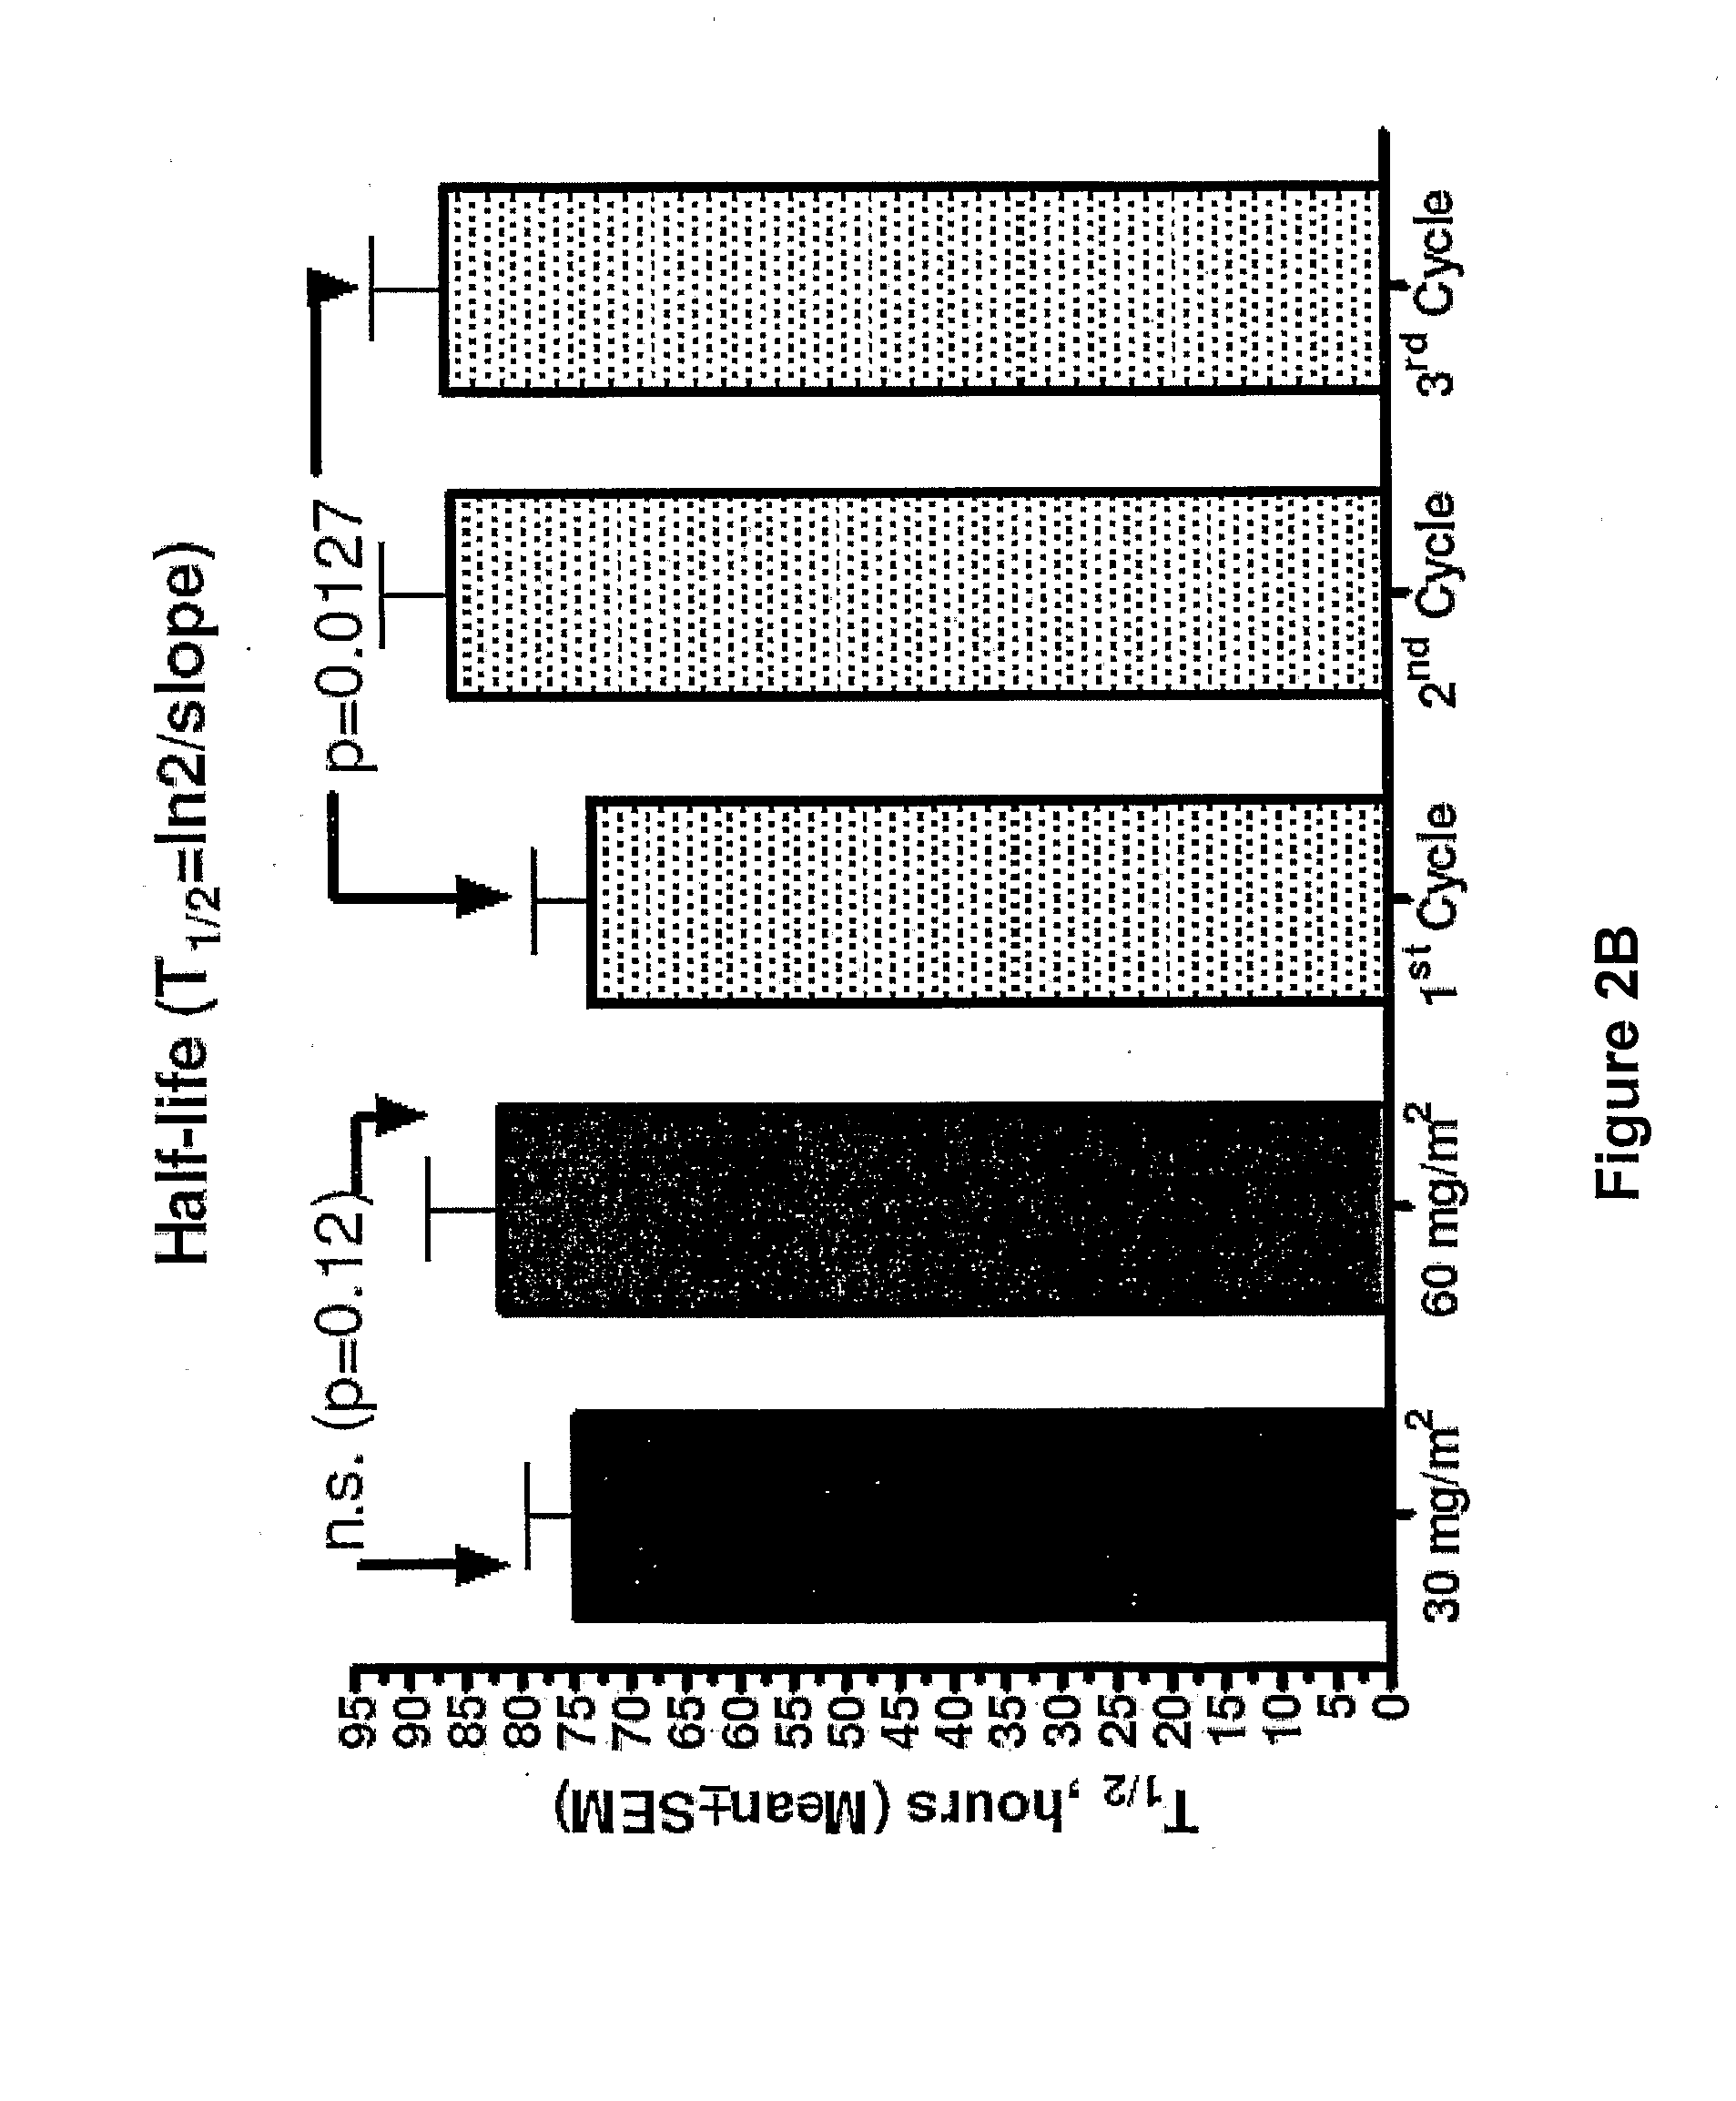 Method for administration of pegylated liposomal doxorubicin